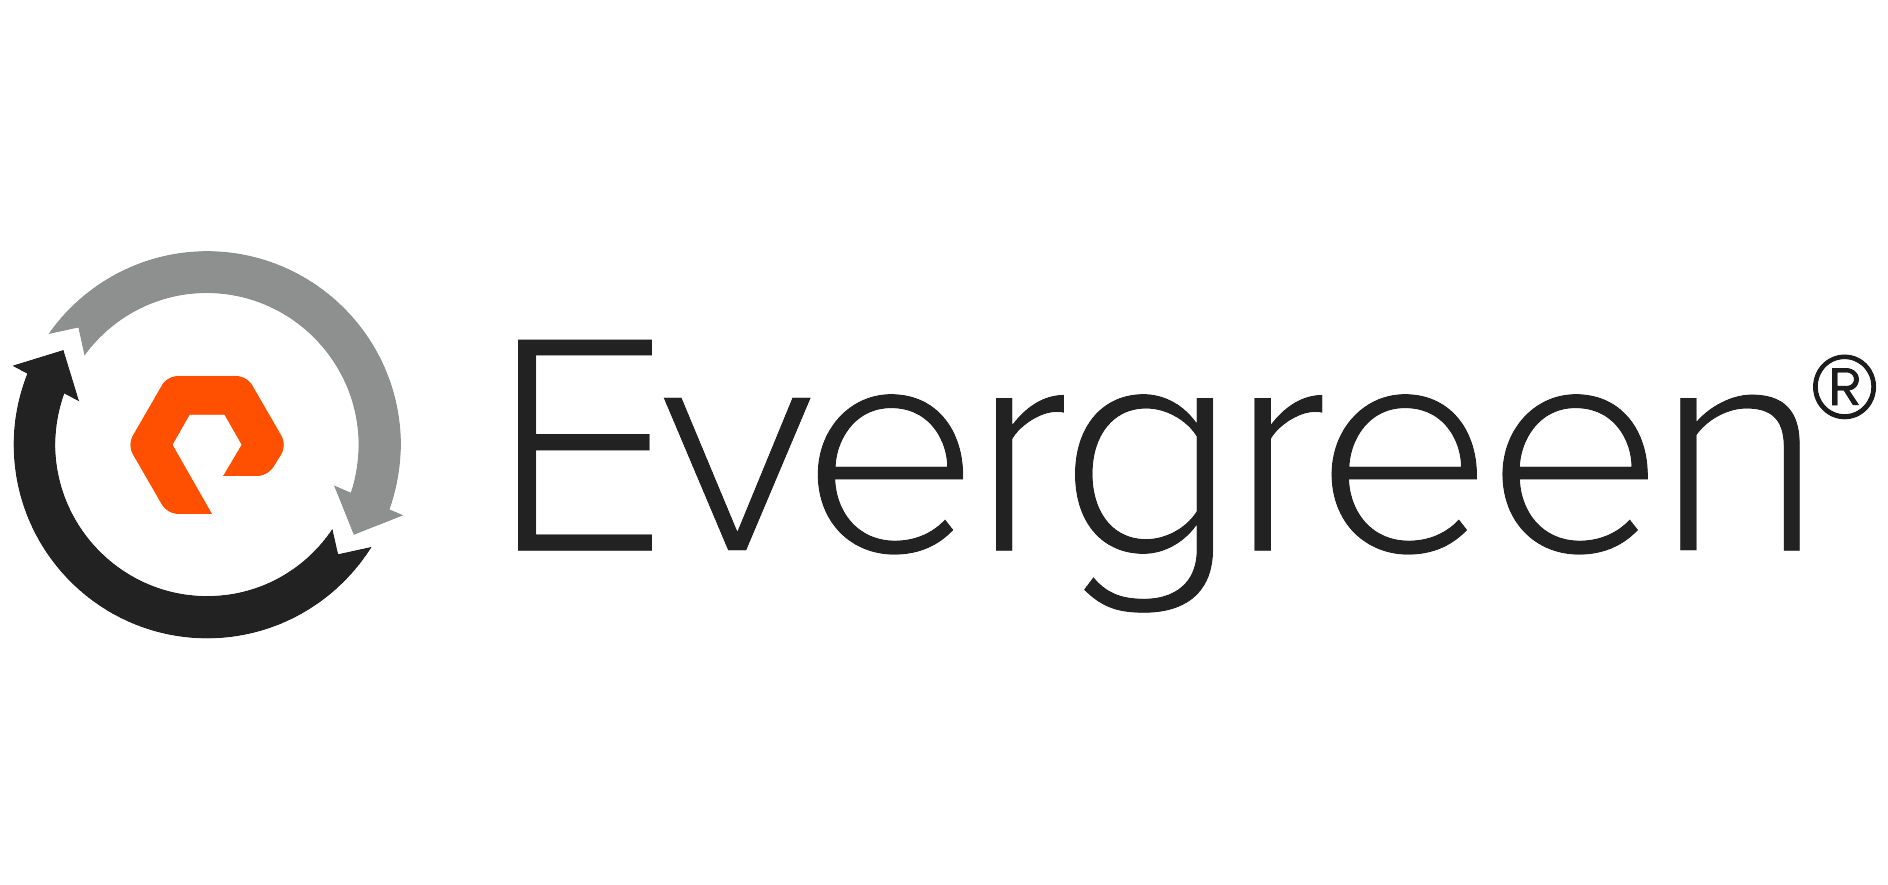 Register trademark Evergreen logo 